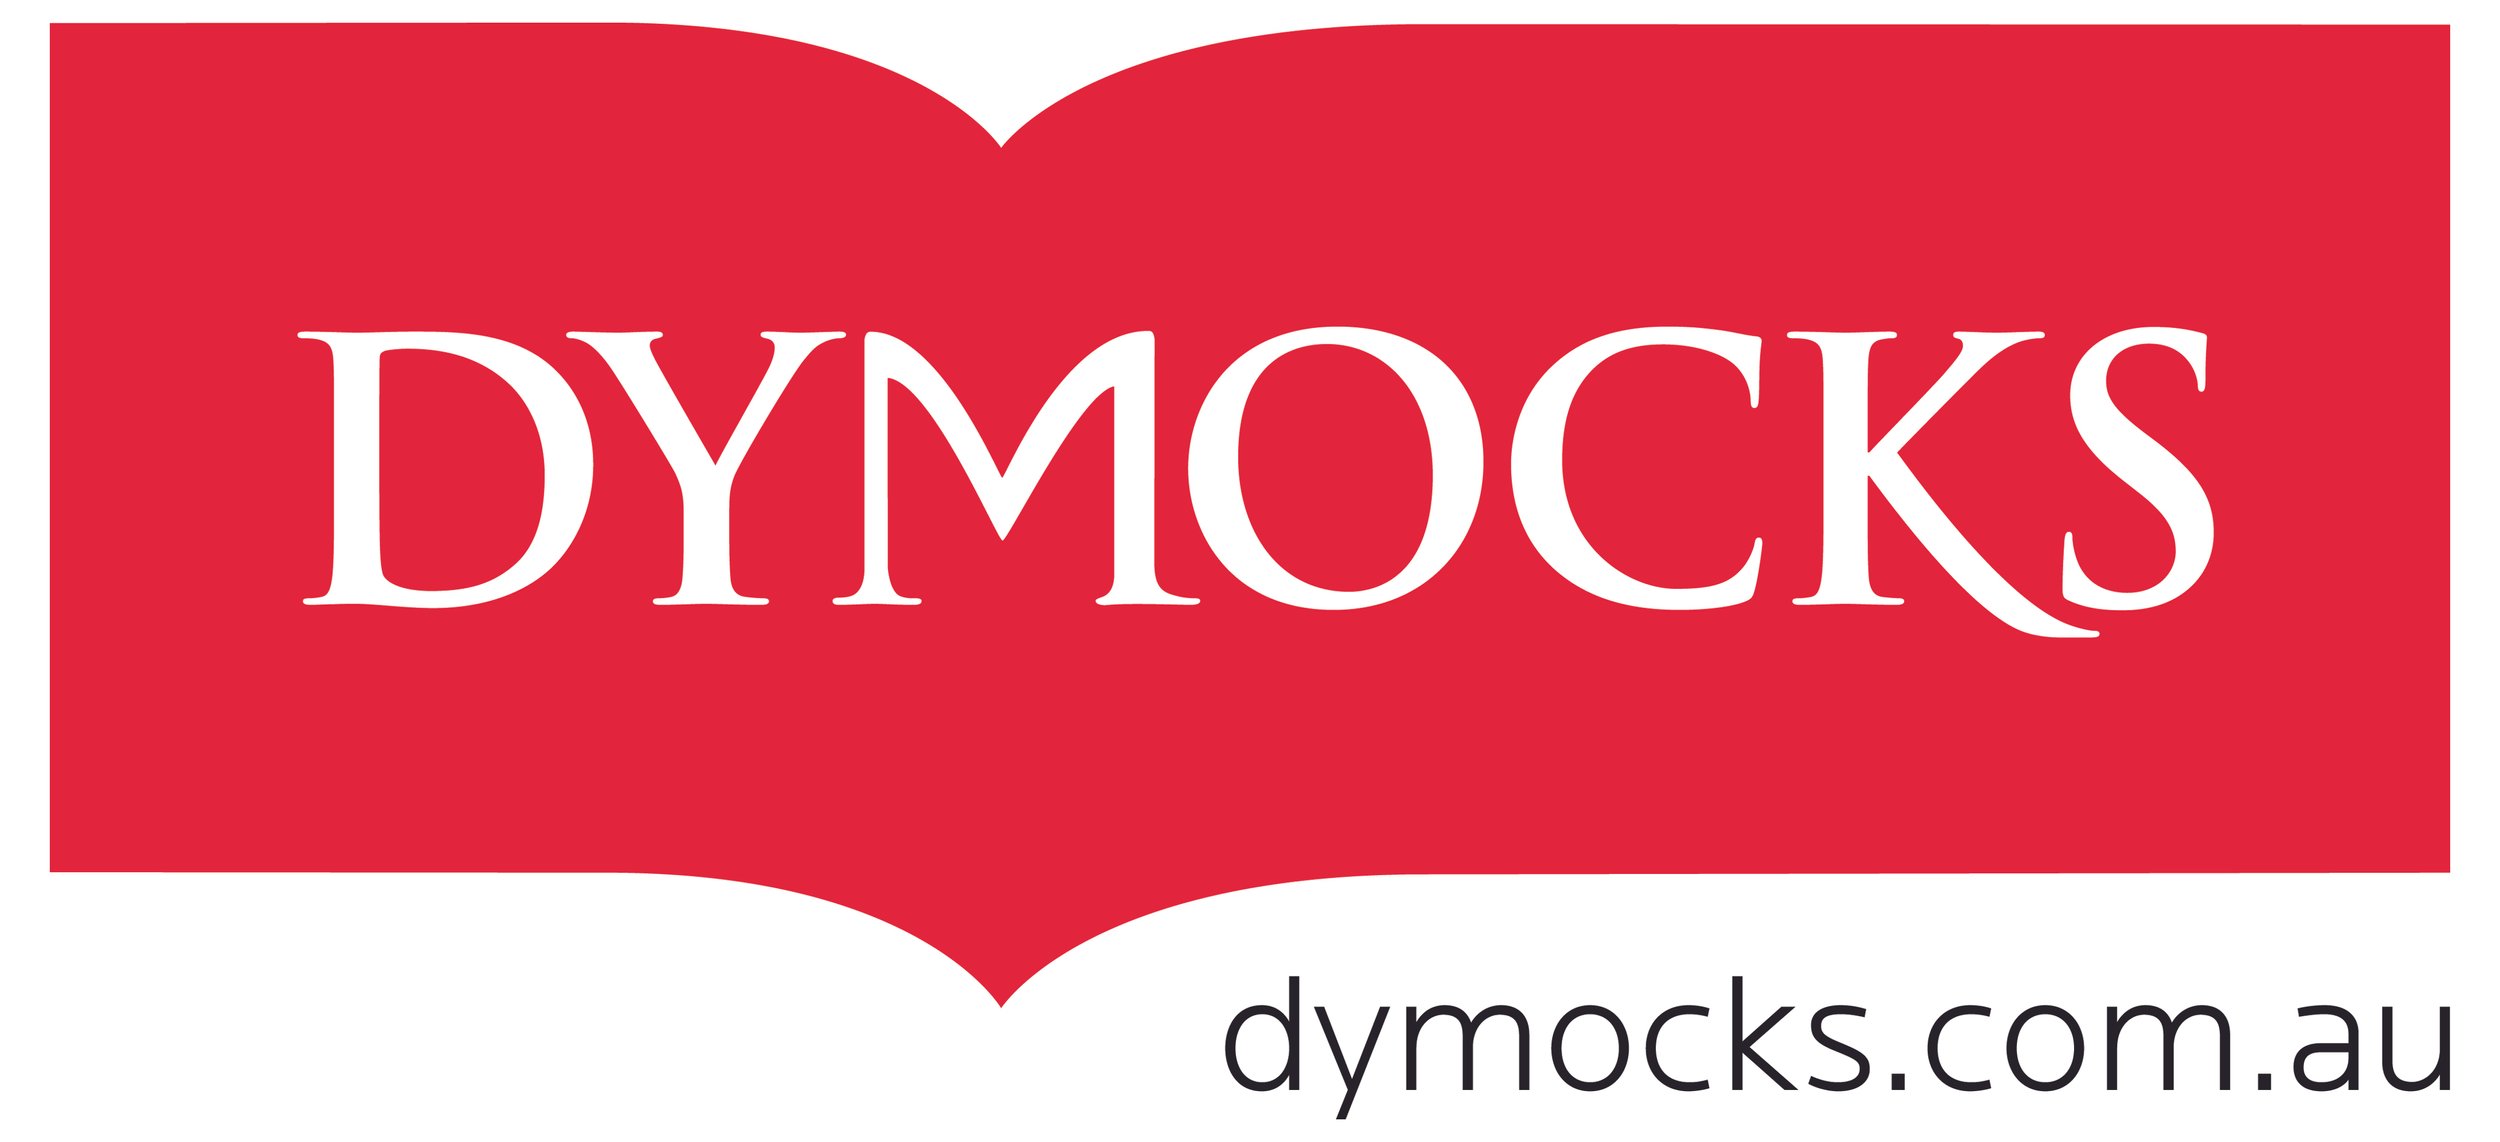 Buy at Dymocks